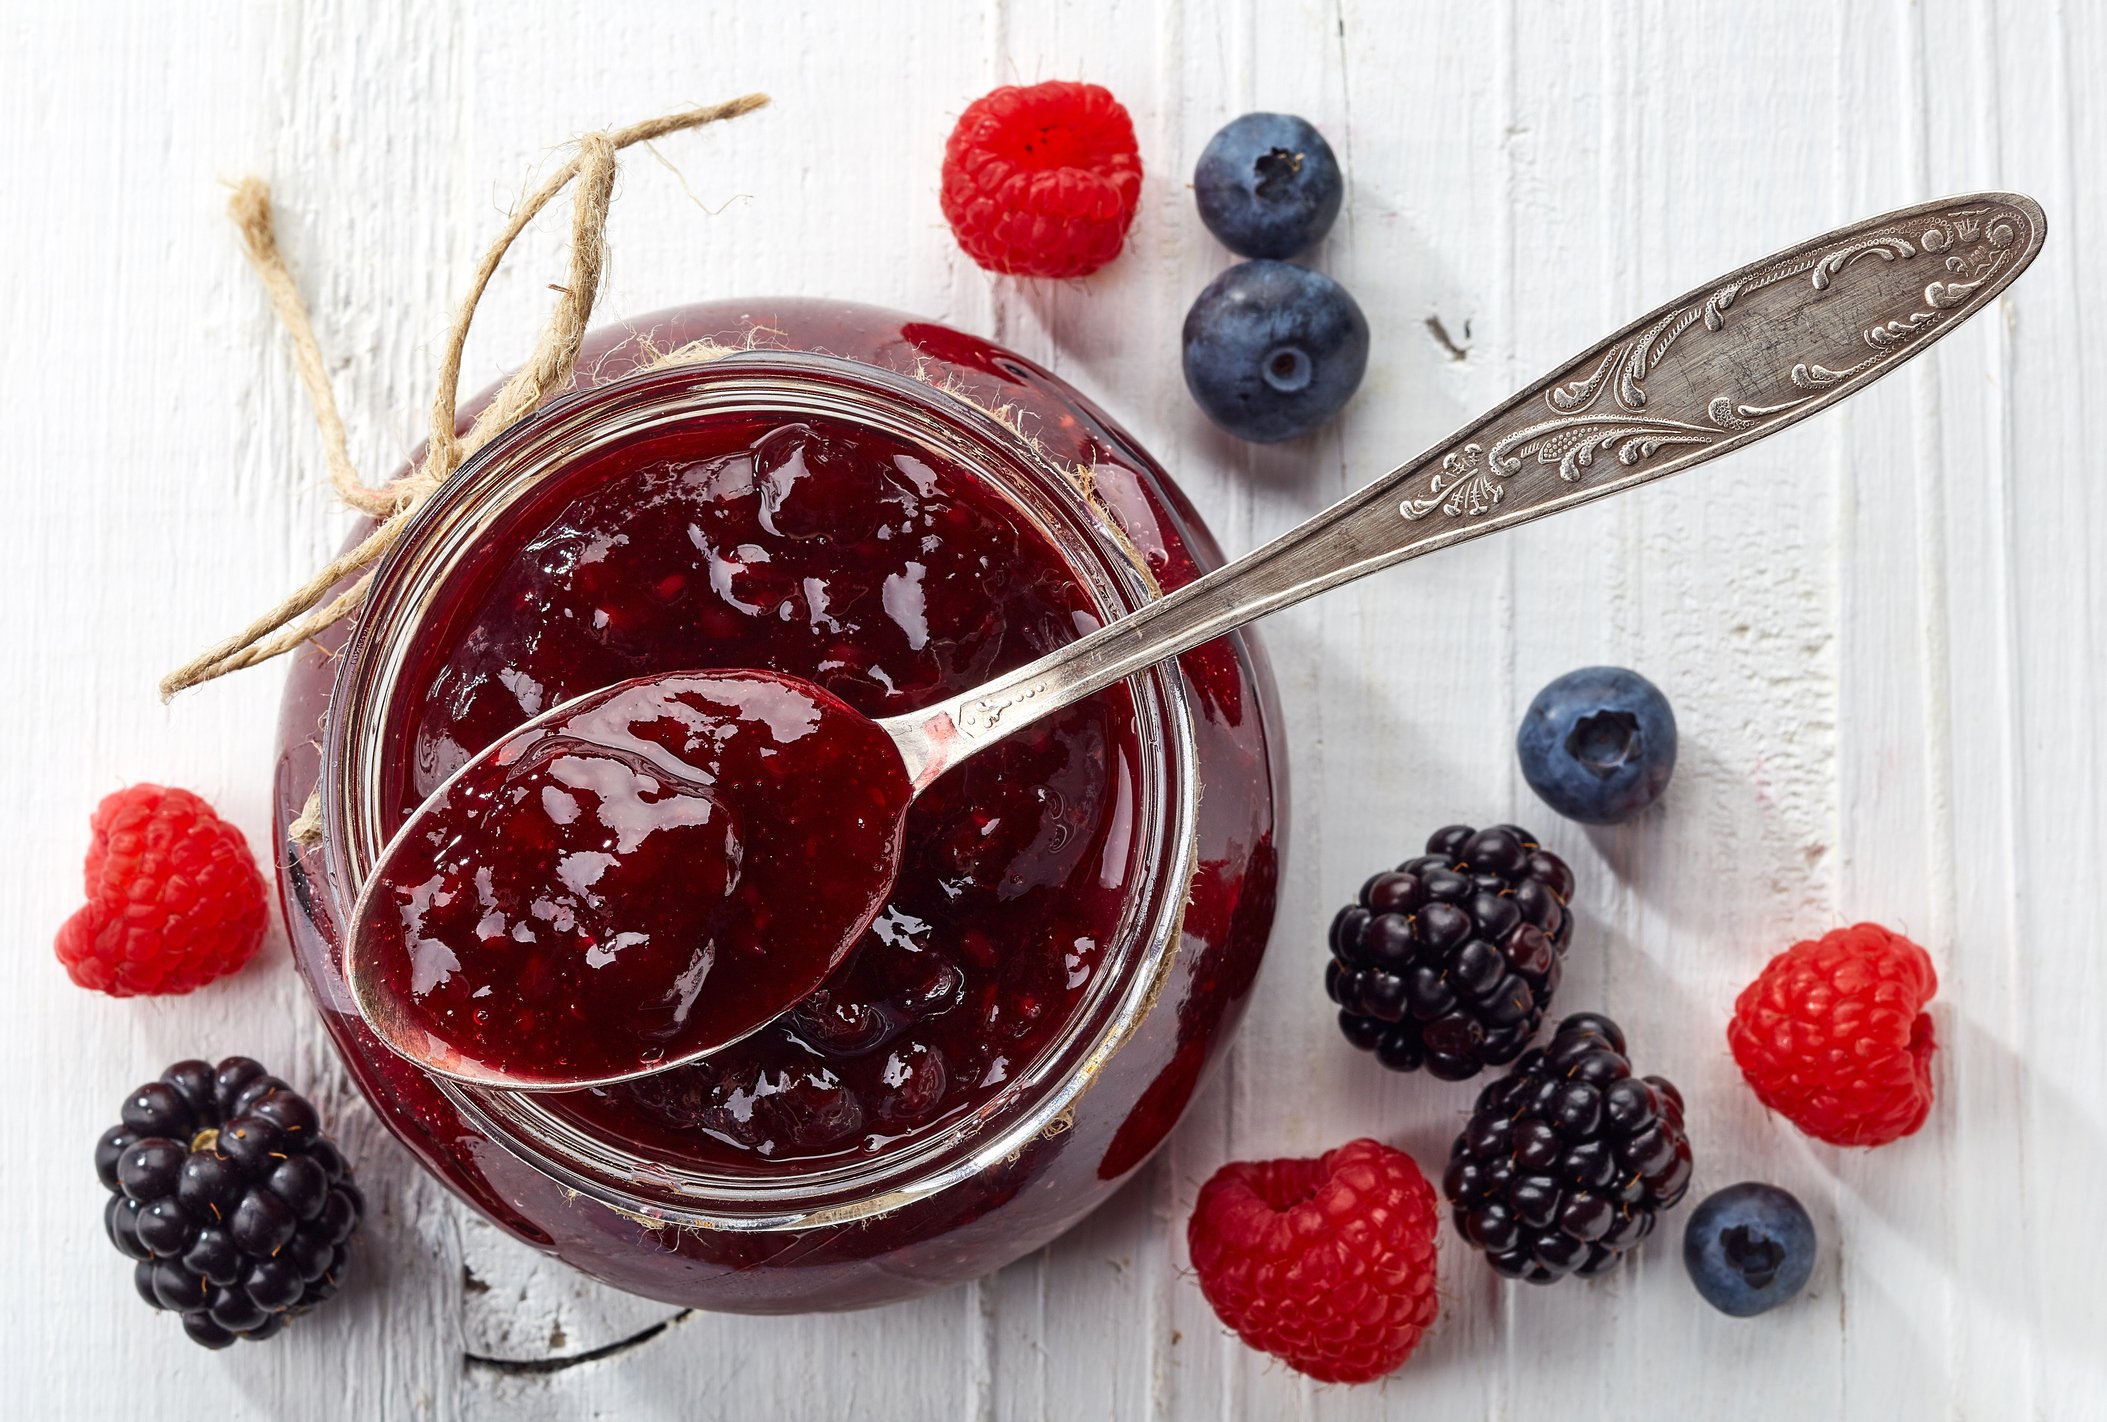 Mixed berry jam is an interesting alternative to regular strawberry jam. (iStock Photo)